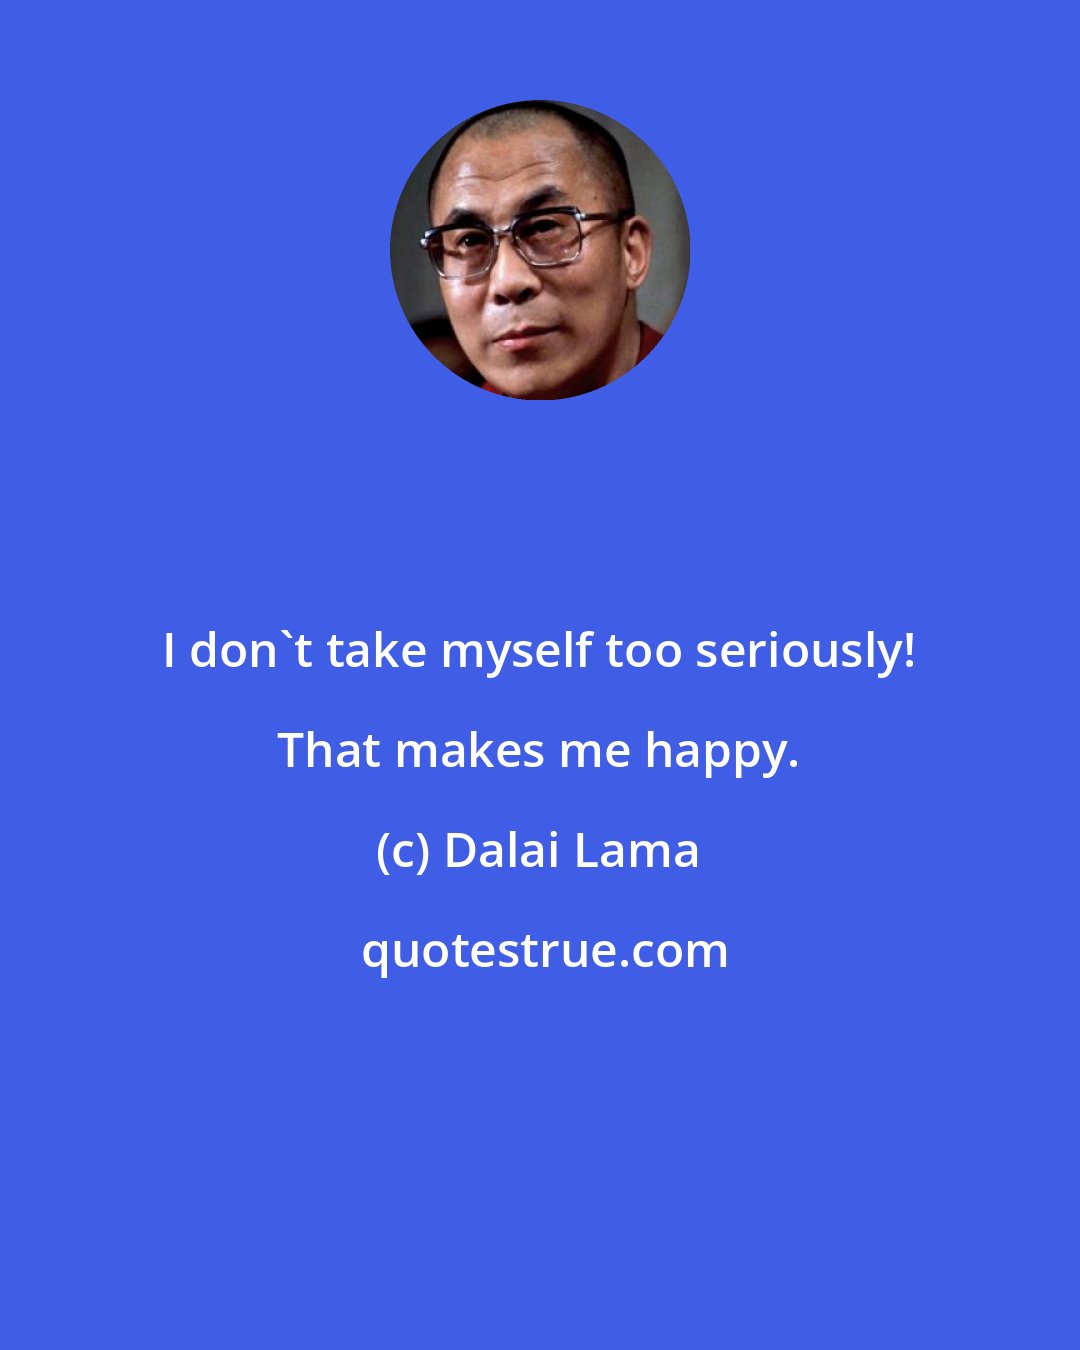 Dalai Lama: I don't take myself too seriously! That makes me happy.